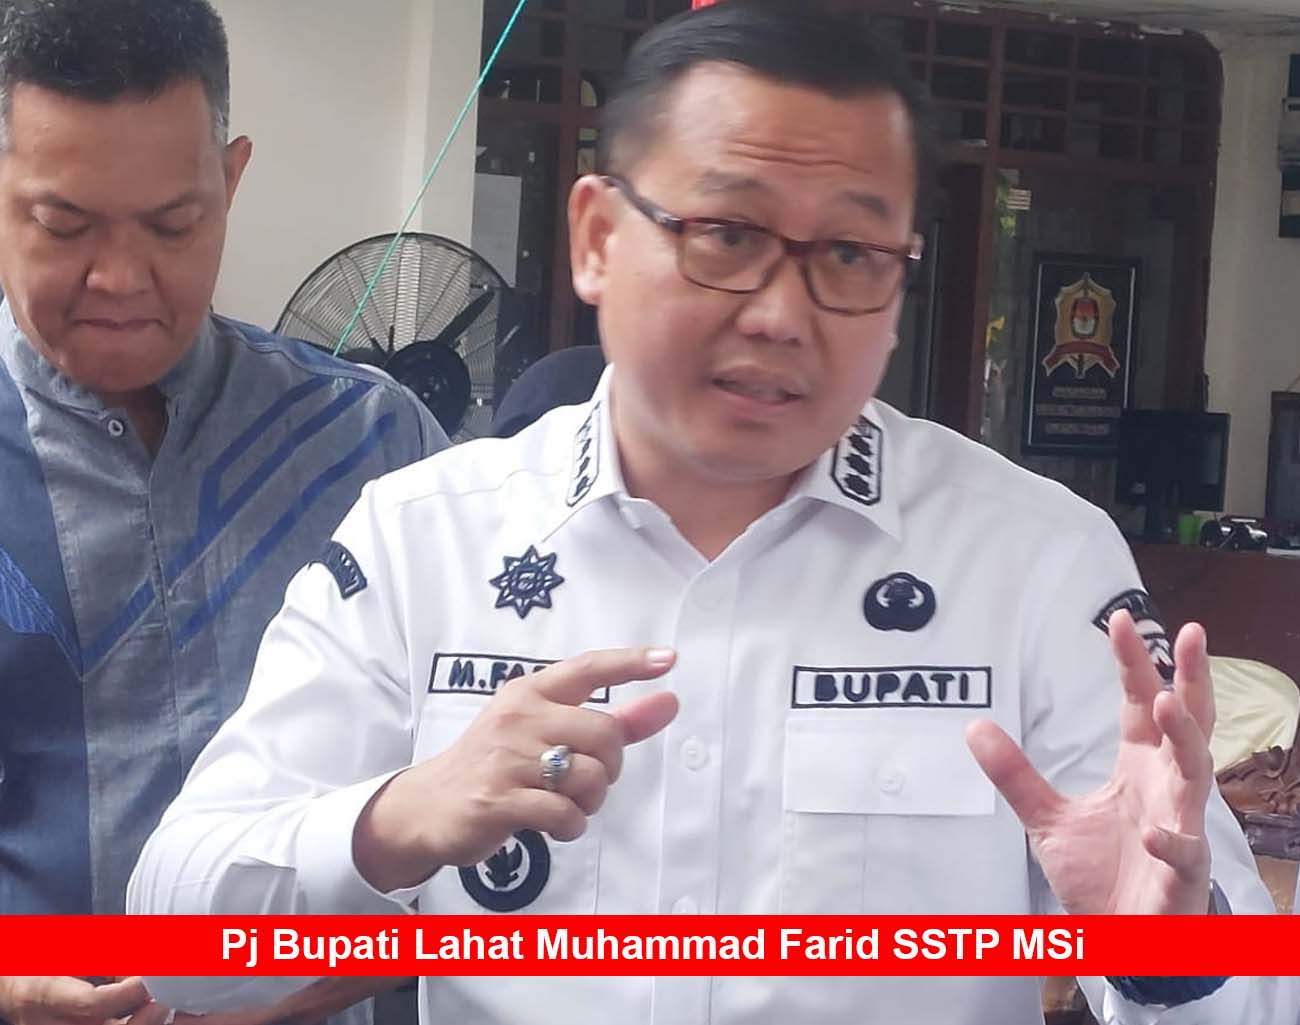 Inilah Ungkapan Pj Bupati Lahat Muhammad Farid terhadap Insan Pers di Kabupaten Lahat